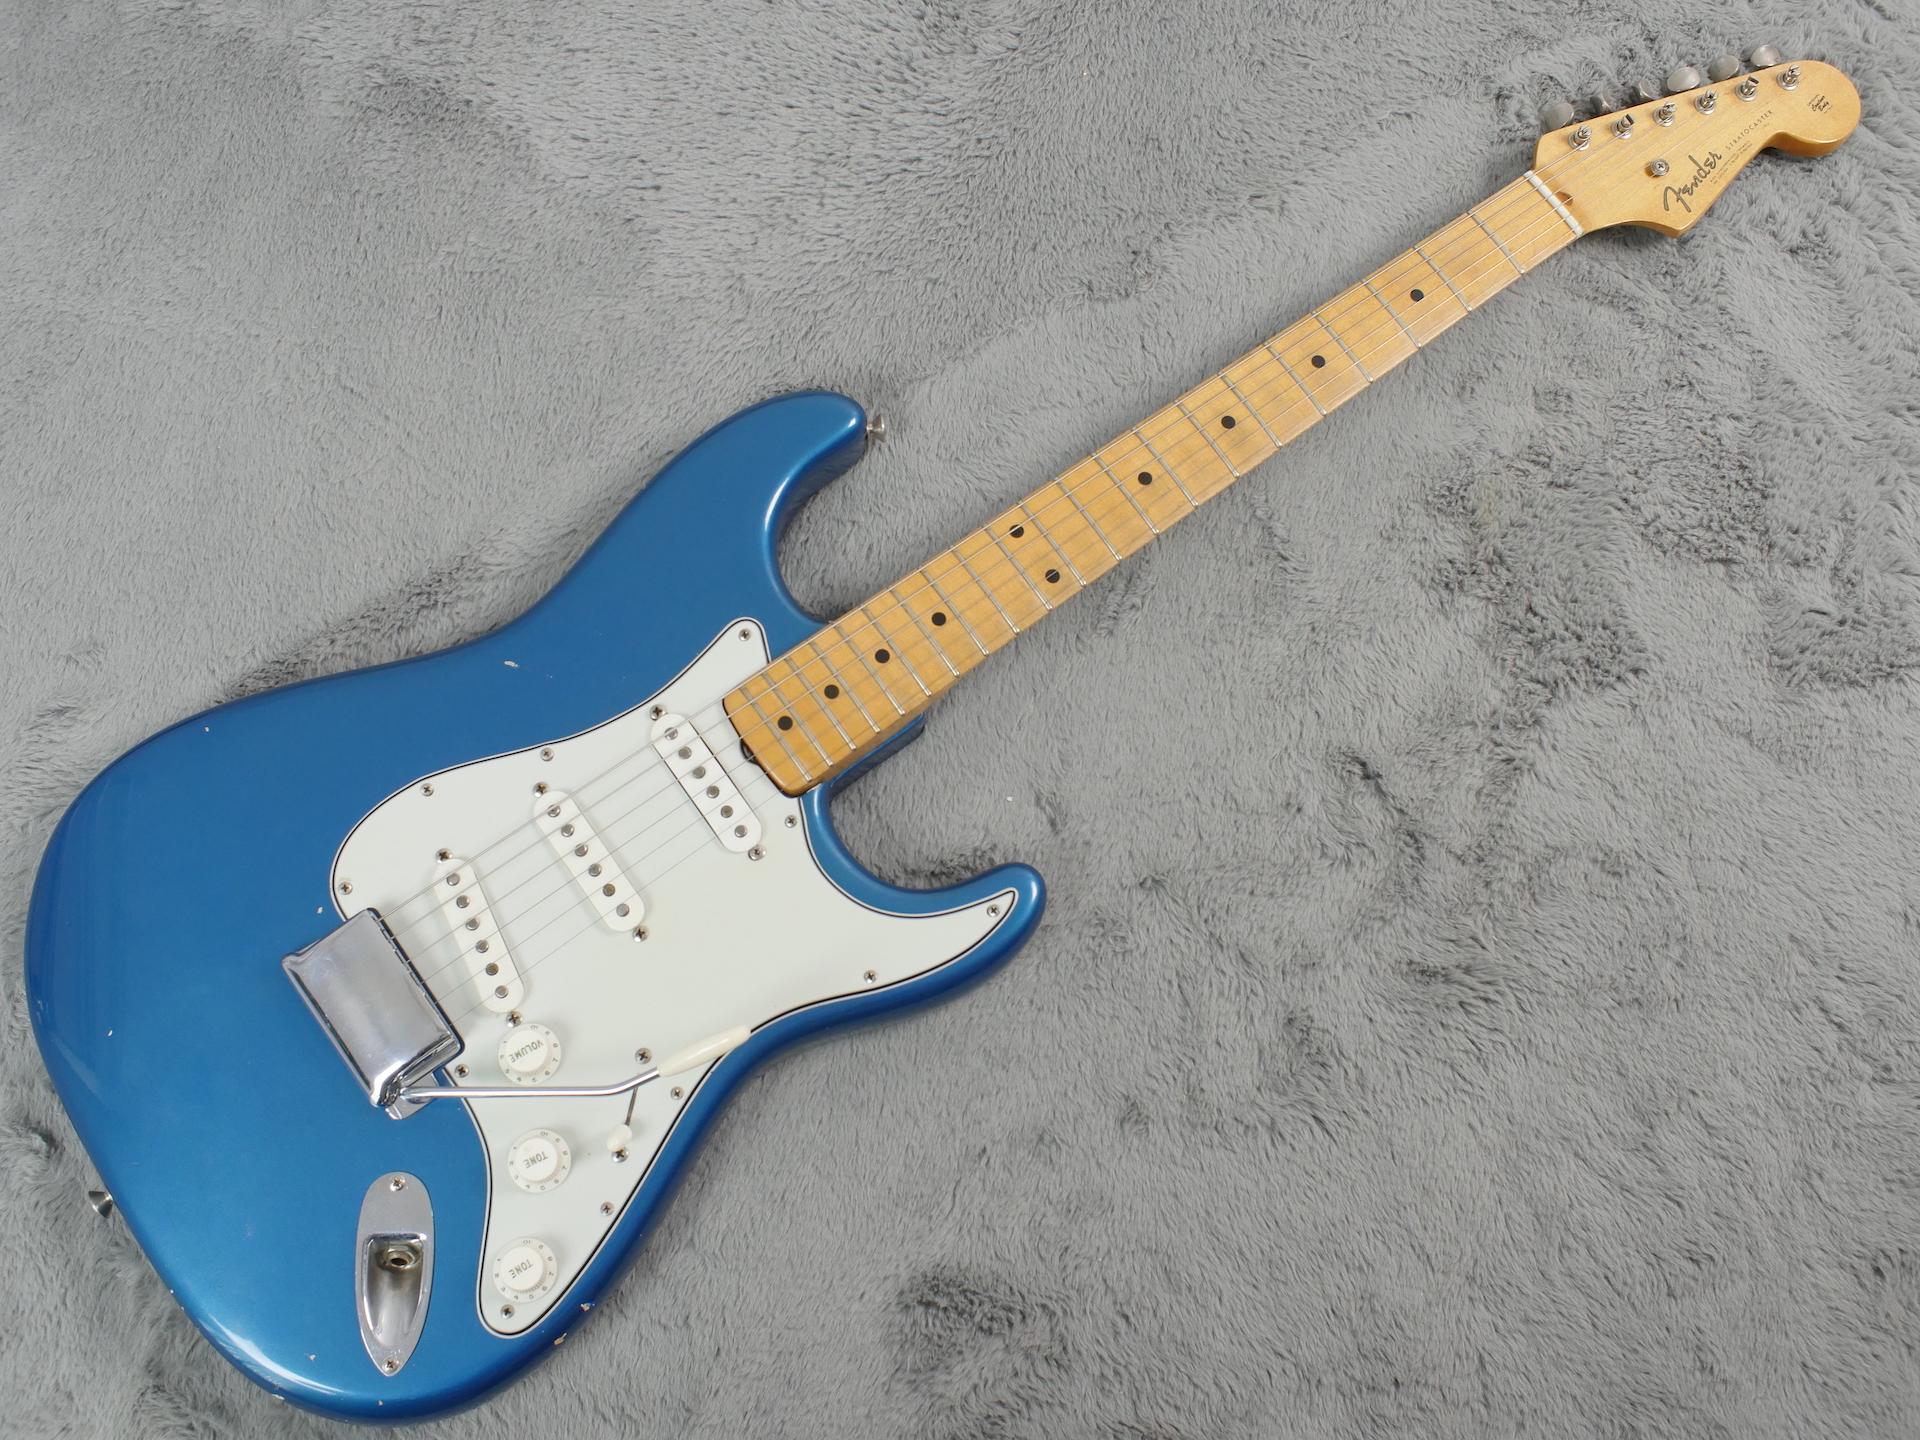 1954 Fender Stratocaster Lake Placid Blue + HSC